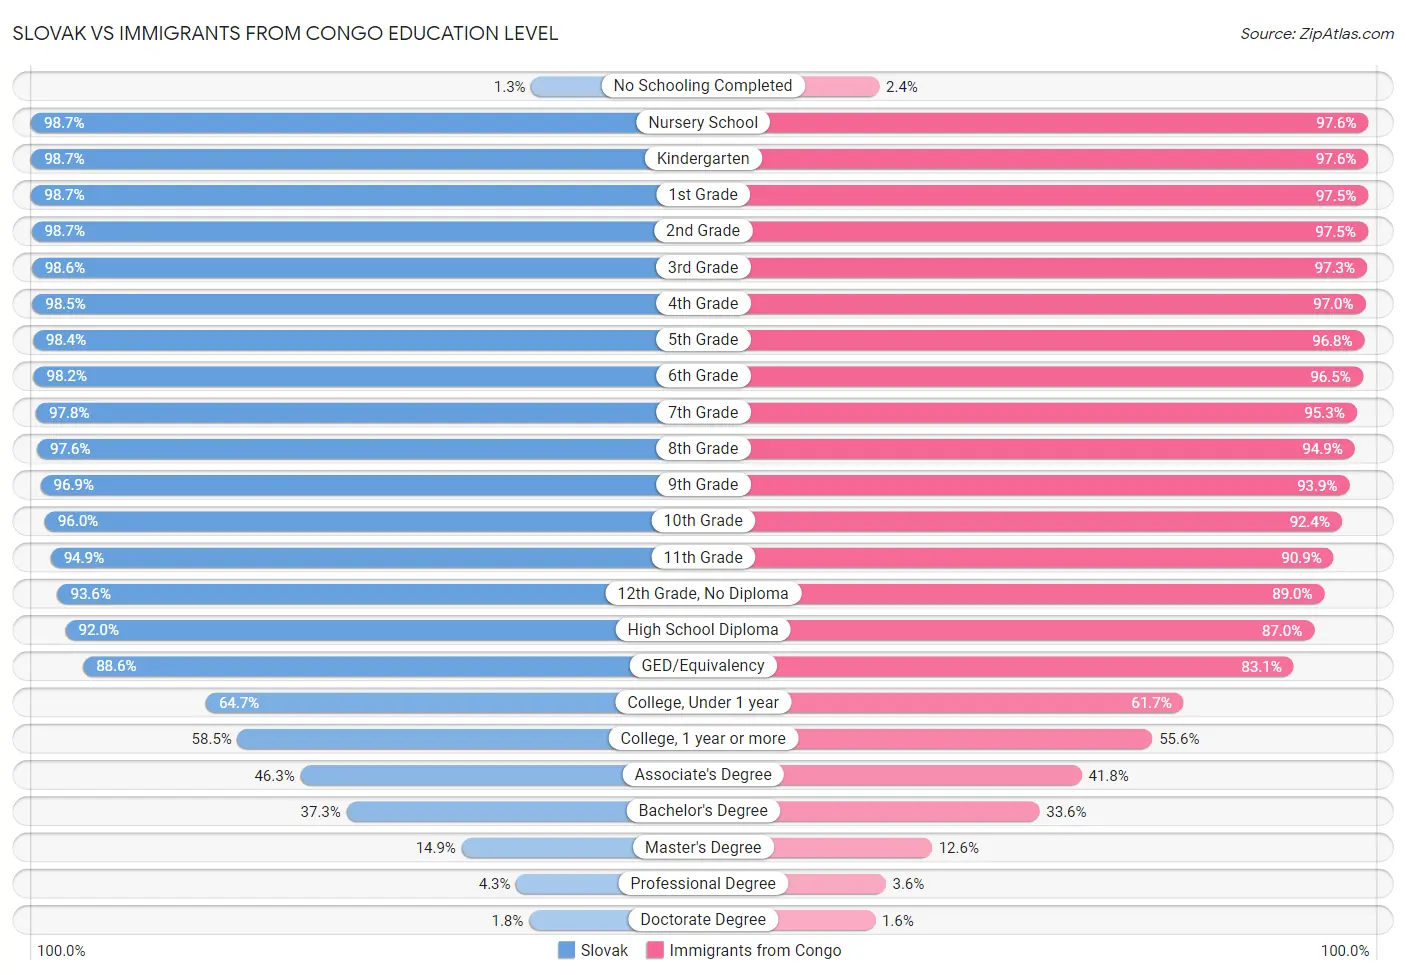 Slovak vs Immigrants from Congo Education Level